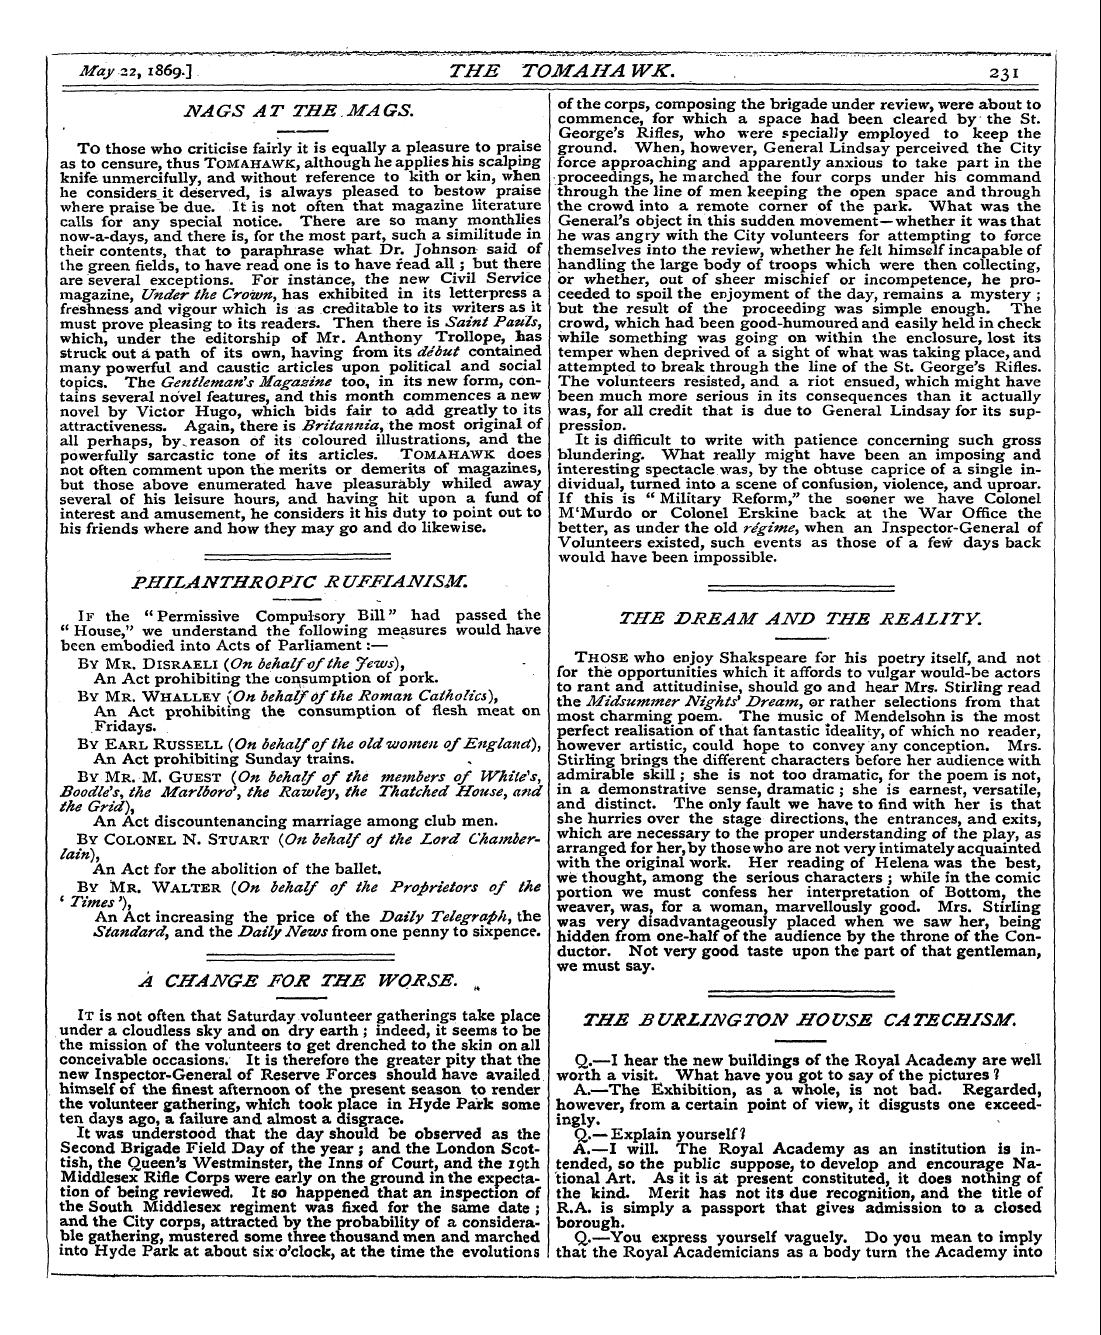 Tomahawk (1867-1870): jS F Y, 1st edition - Philanthropic Ruffianism.